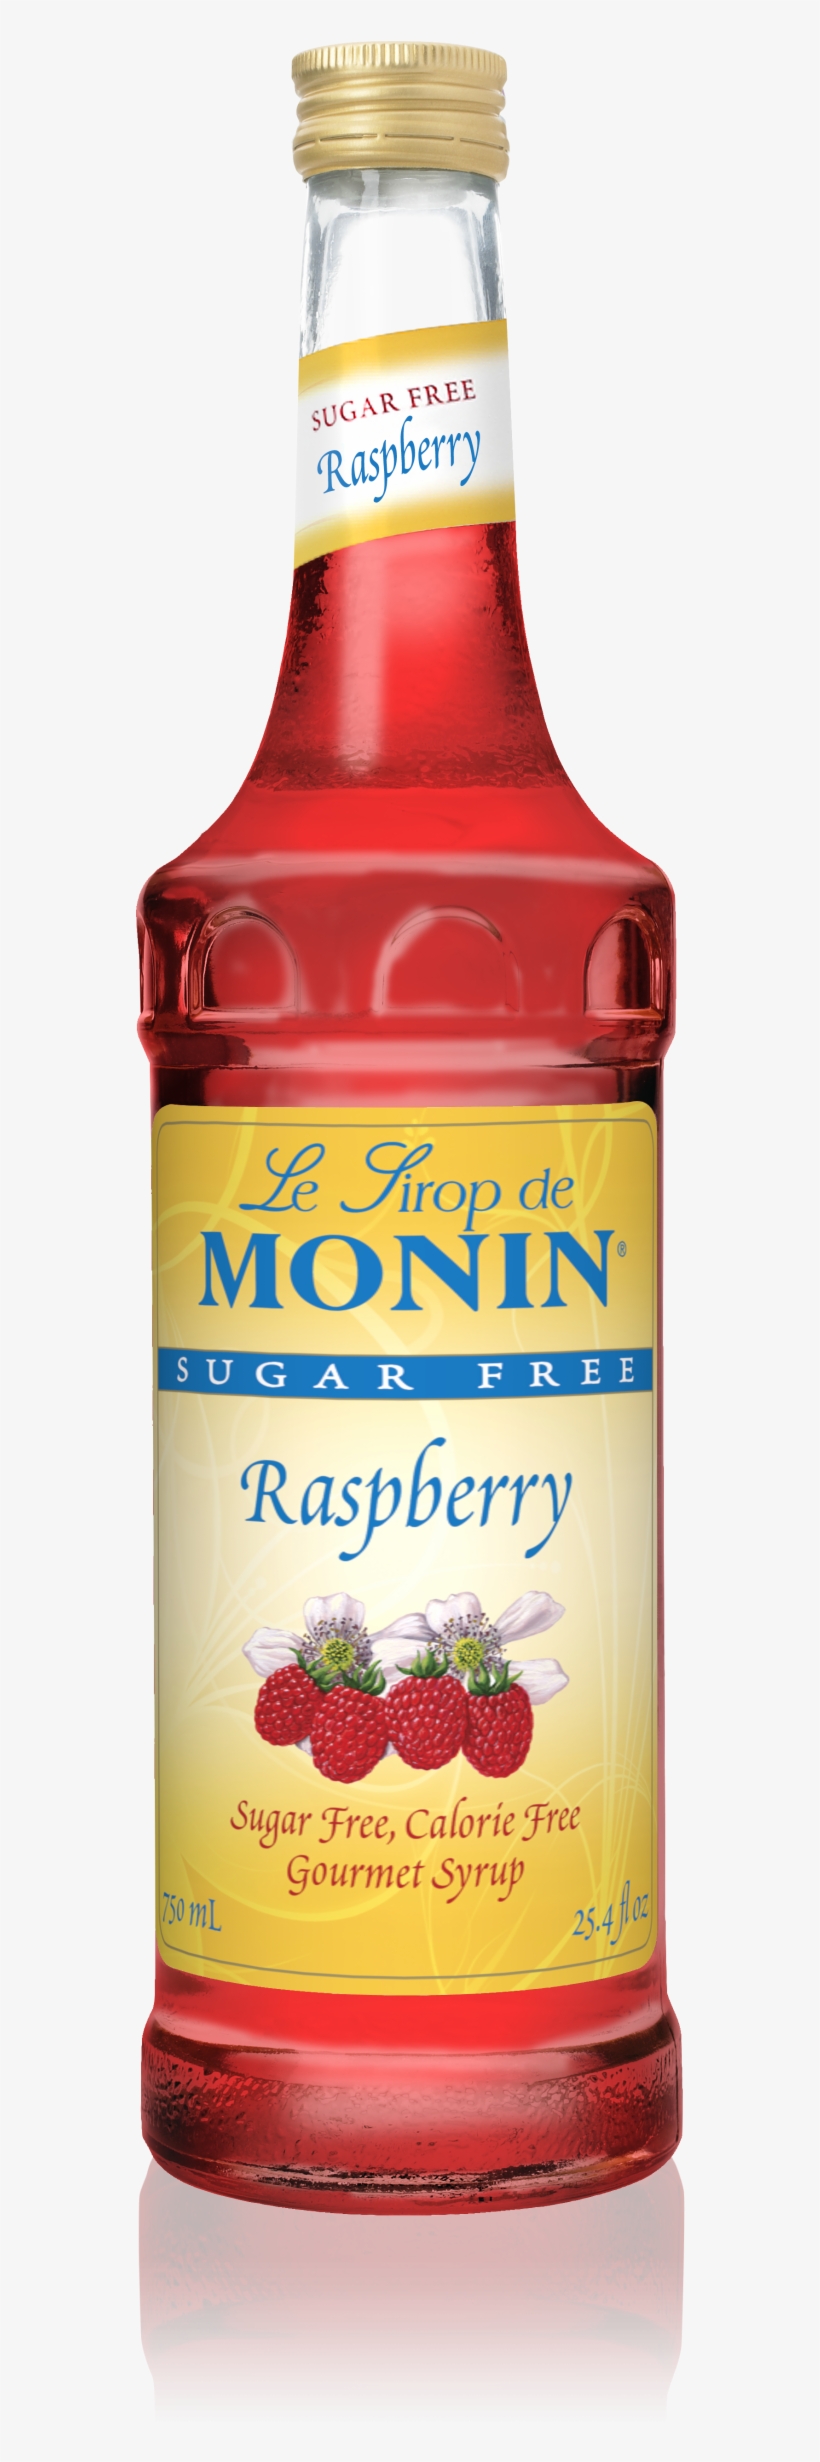 750 Ml Sugar Free Raspberry Syrup - Monin Caramel Syrup, transparent png #9684793